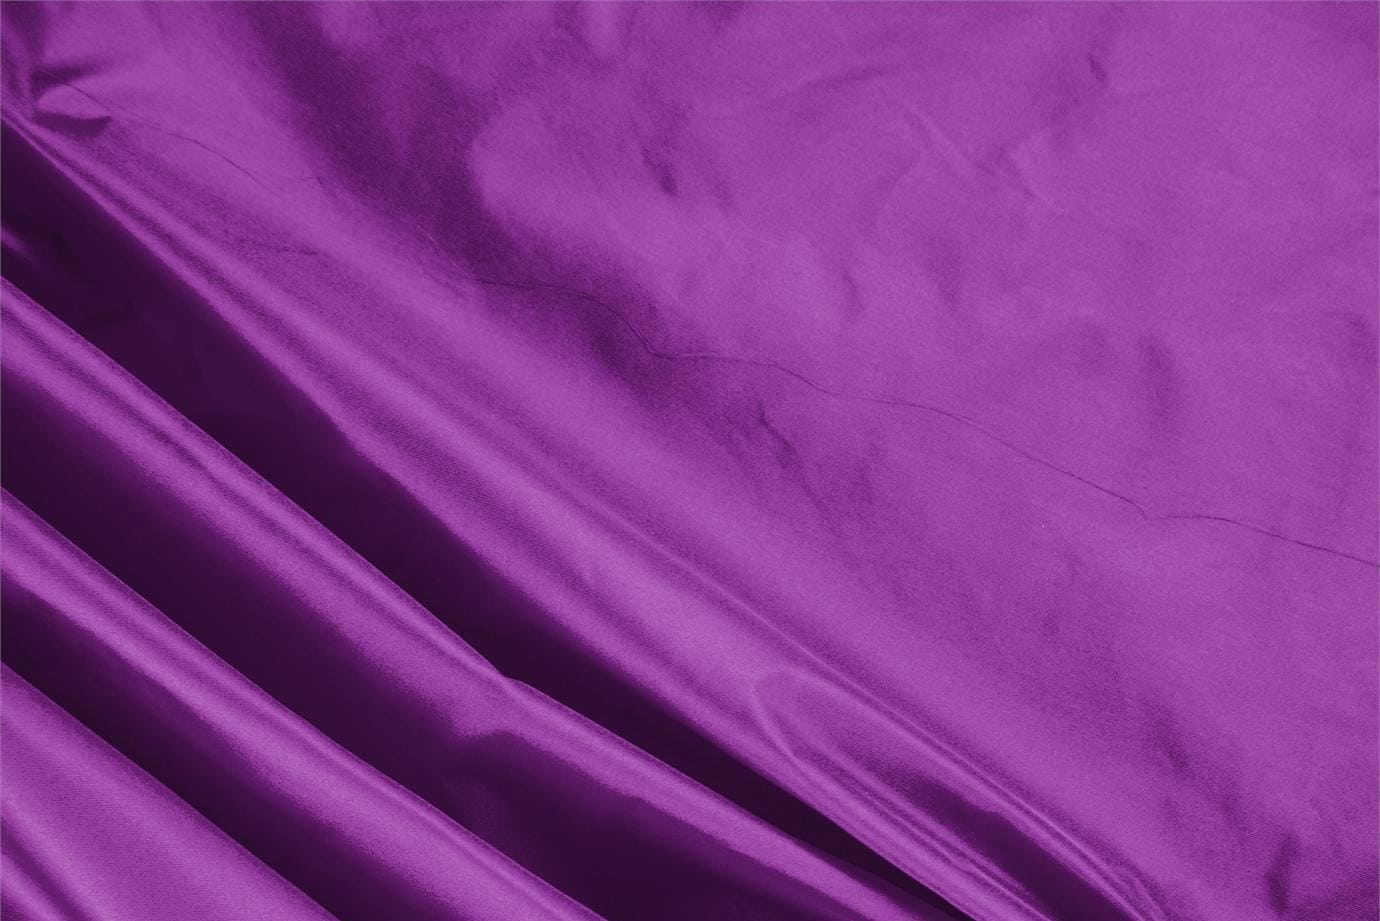 Cardinal Purple Silk Taffeta fabric for dressmaking